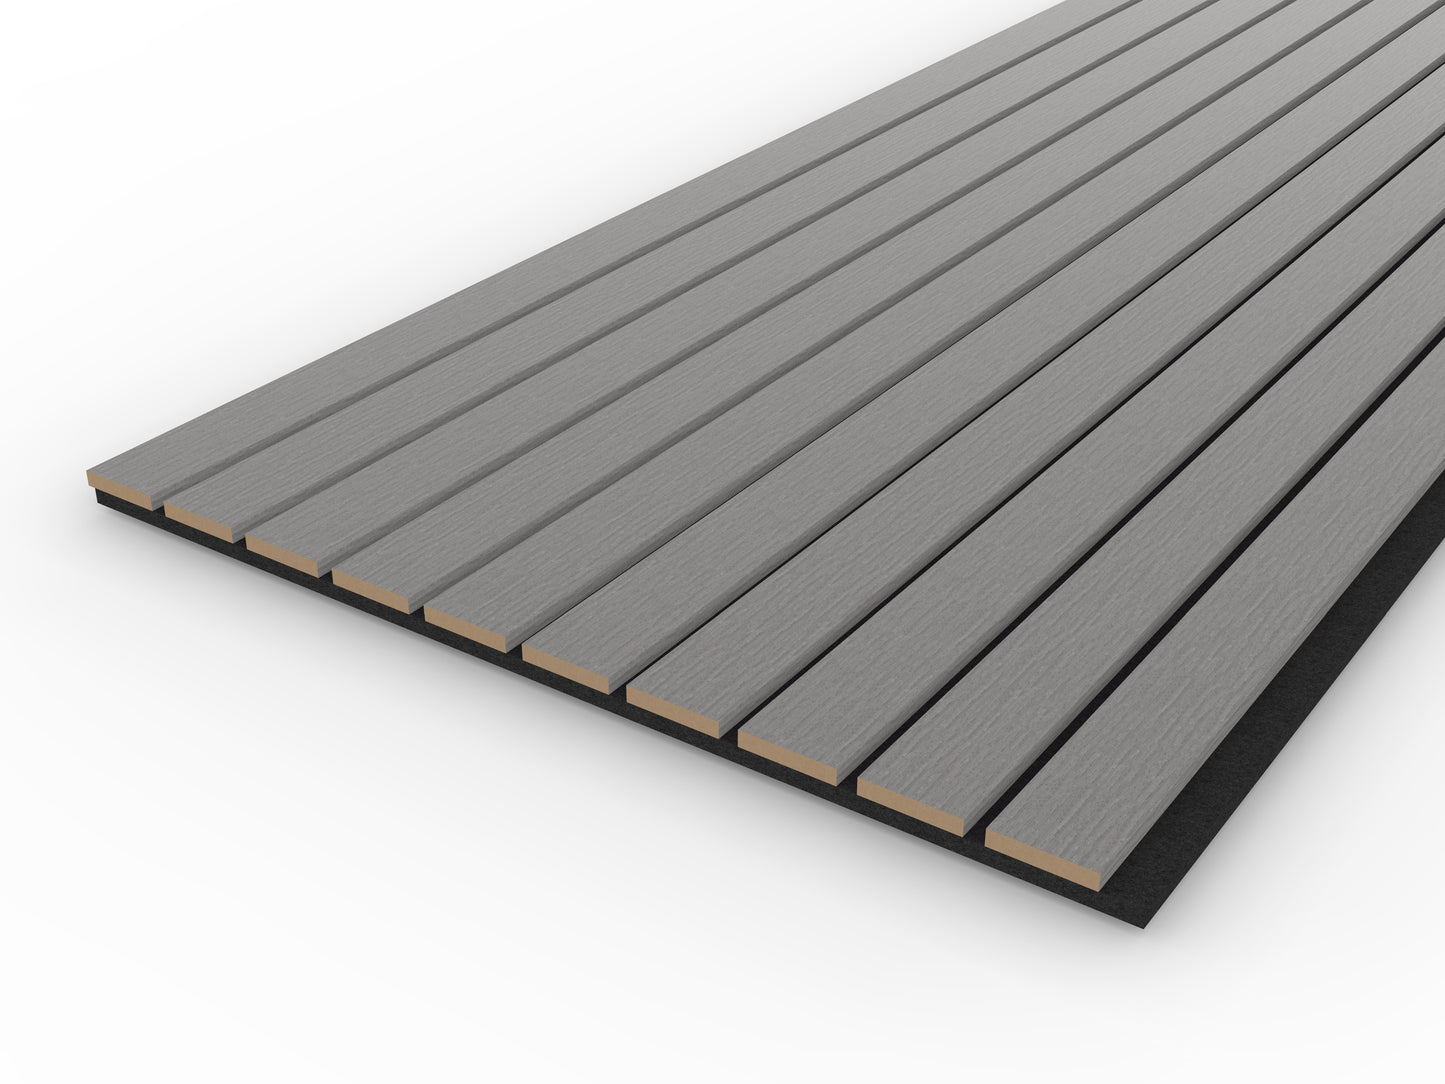 Grey Acoustic Wood Wall Panel Wide Slat Series 2 - 240x60cm